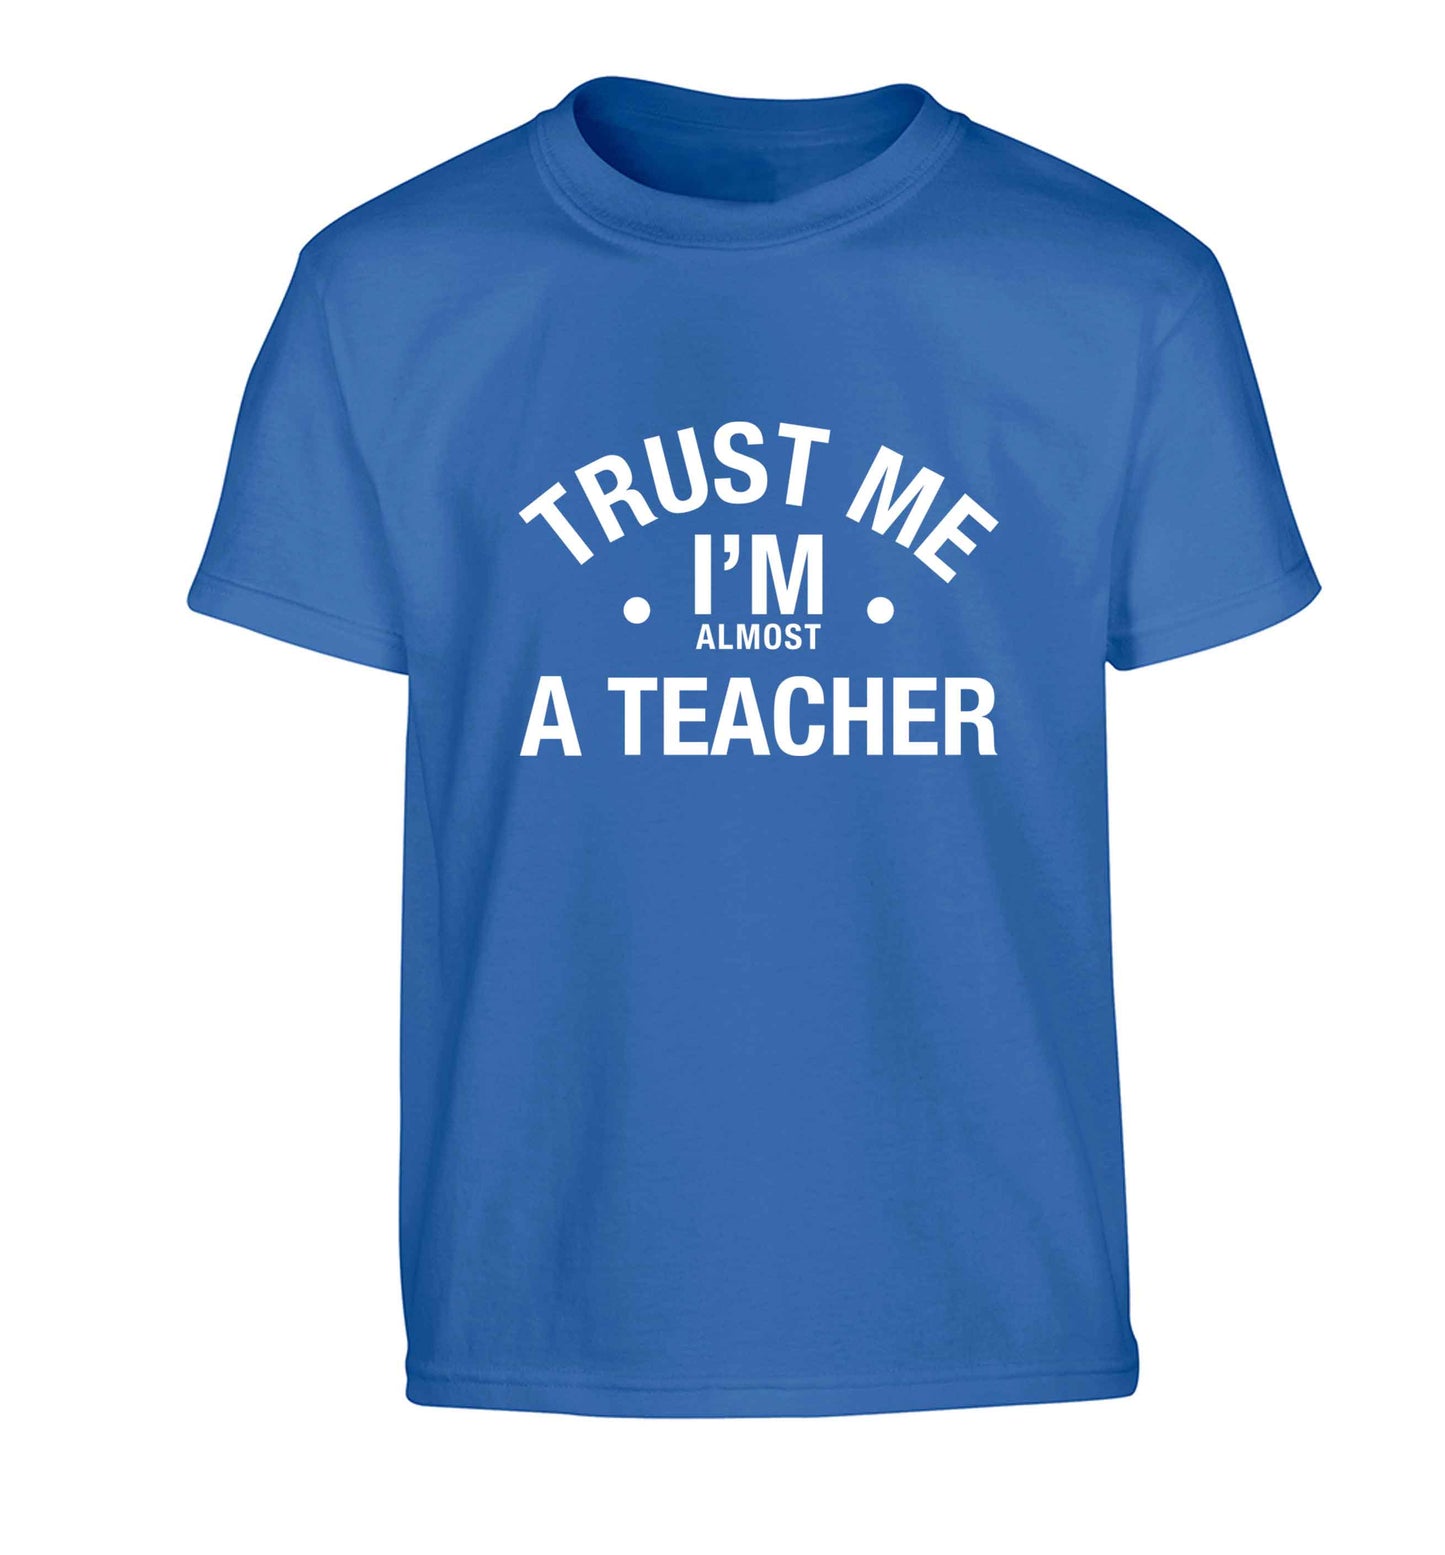 Trust me I'm almost a teacher Children's blue Tshirt 12-13 Years